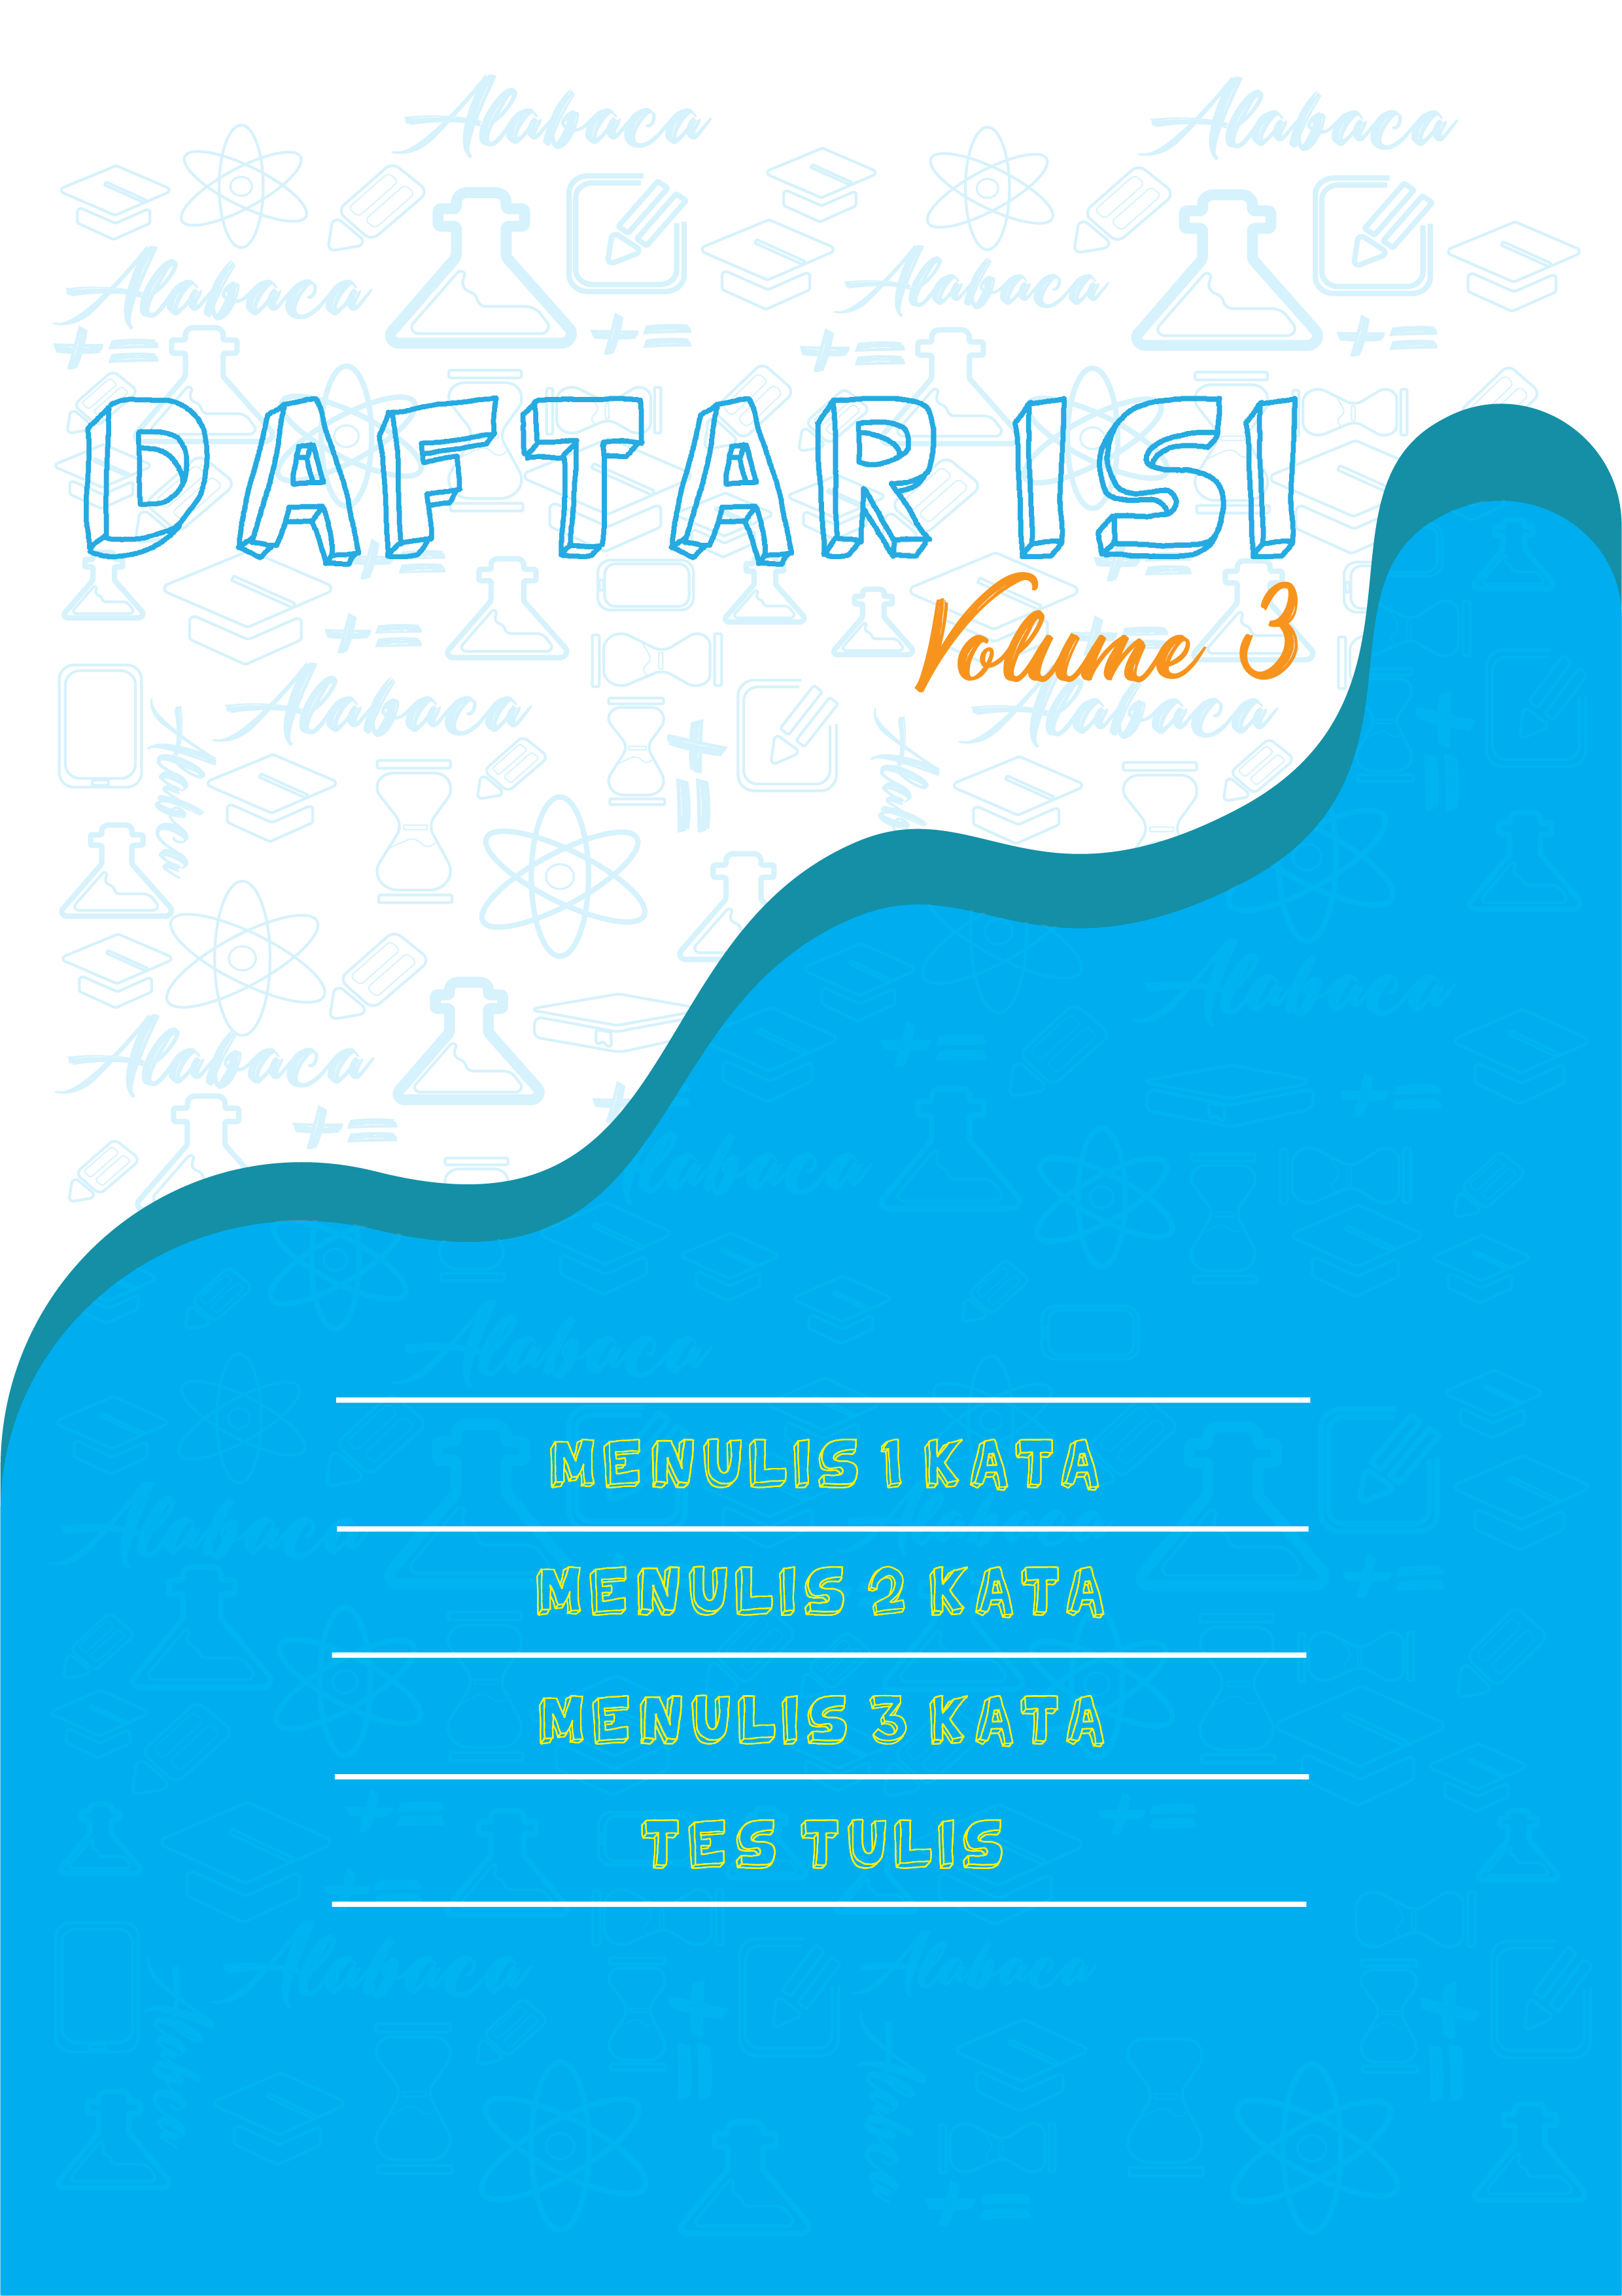 DAFTAR ISI VOLUME 3